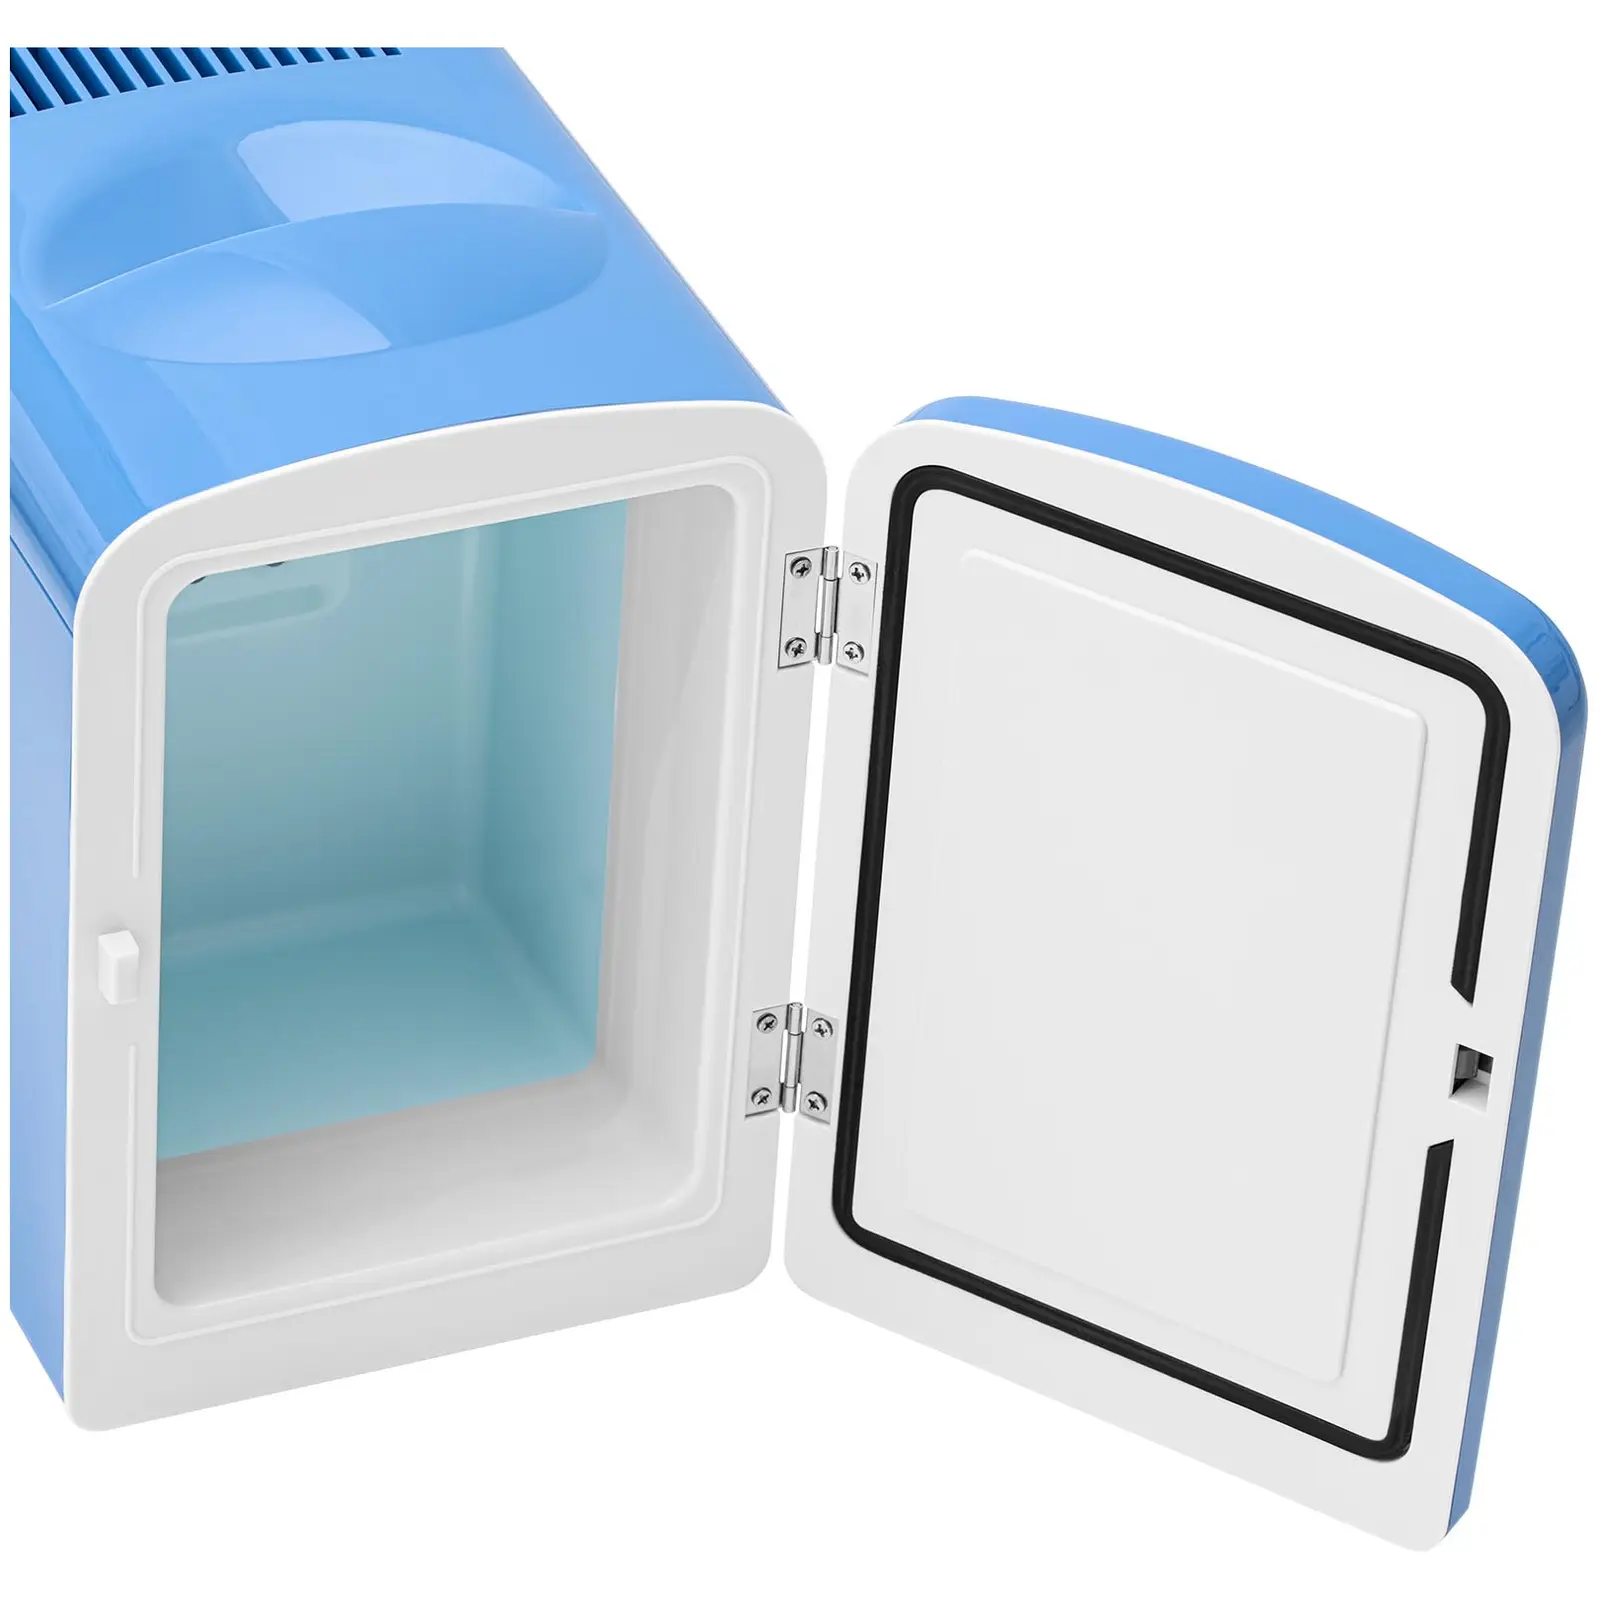 Mini-Kühlschrank 12 V / 230 V - 2-in-1-Gerät mit Warmhaltefunktion - 4 L - Blau - 4